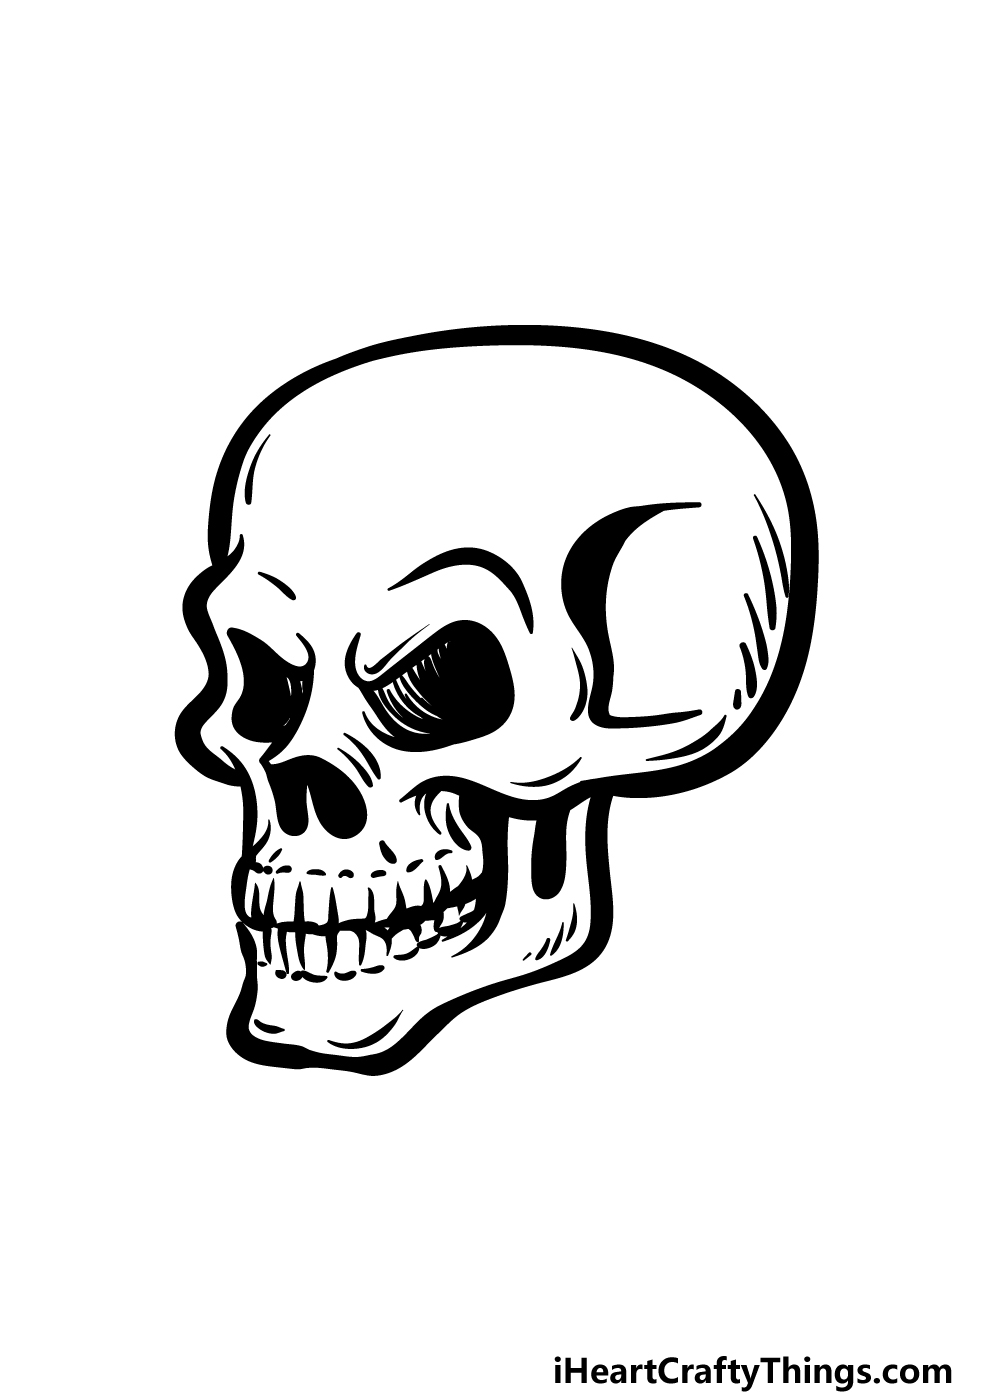 Cartoon Skull Drawing - How To Draw A Cartoon Skull Step By Step